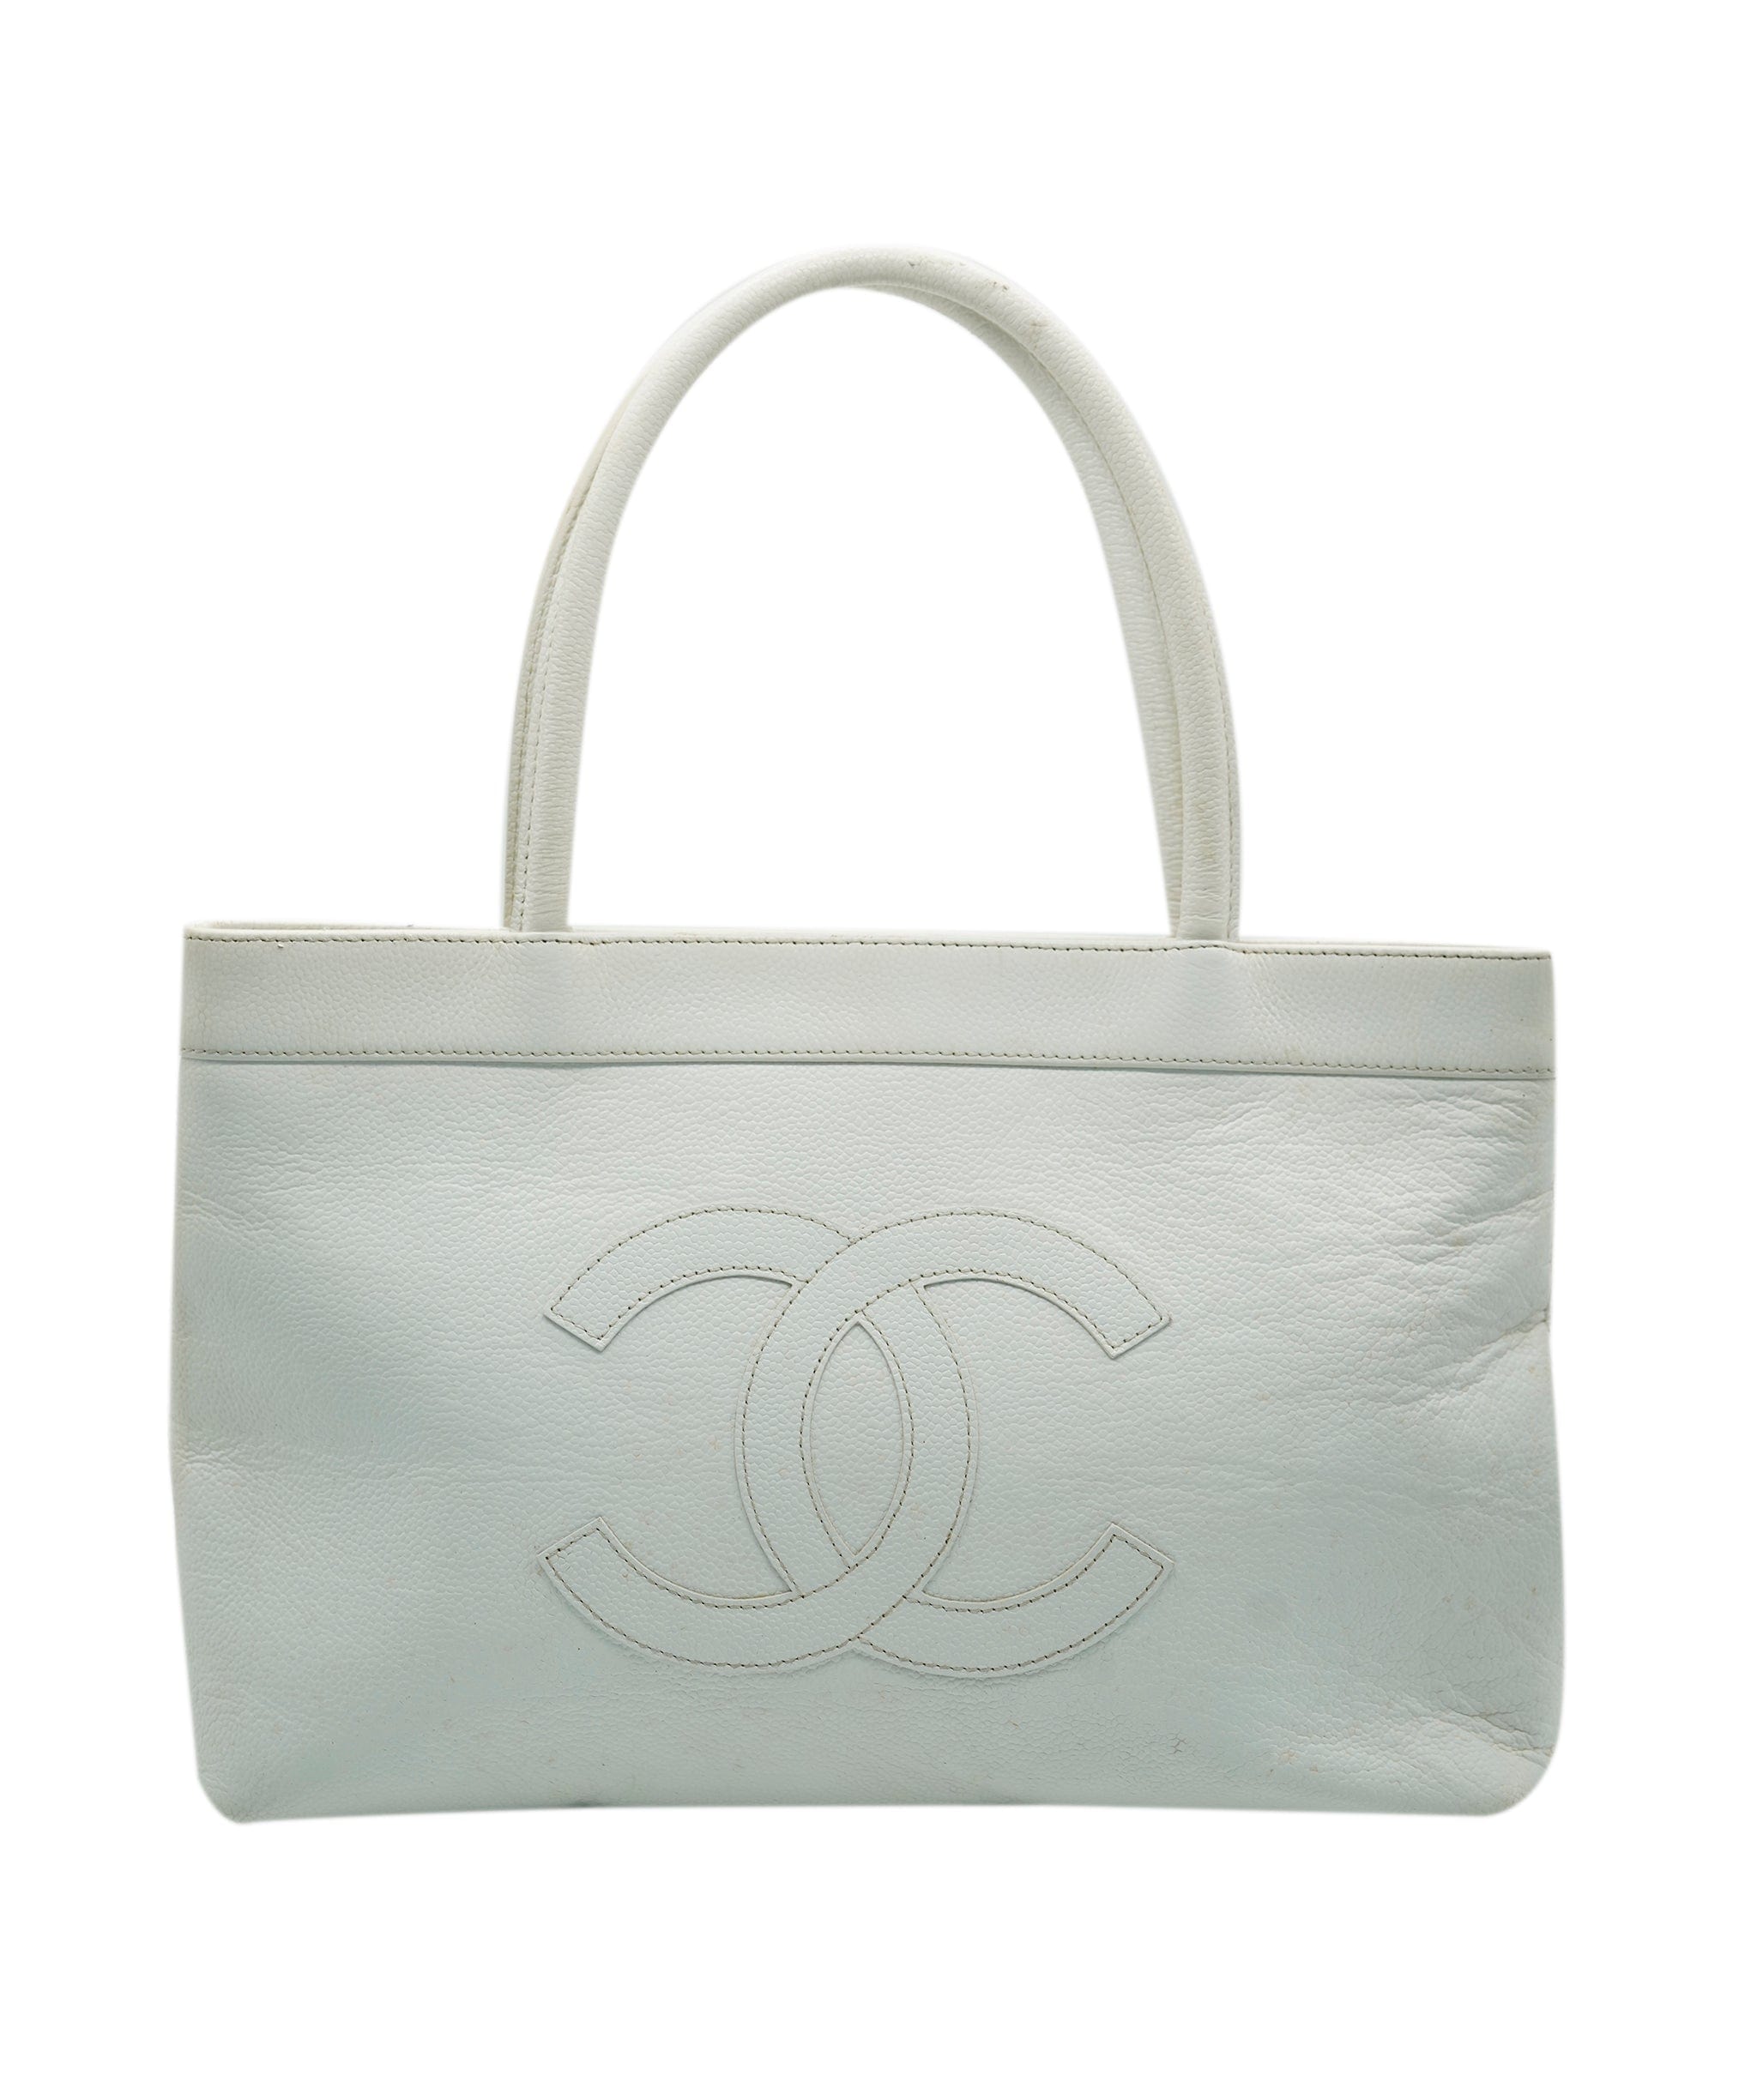 Chanel Chanel Shopping Bag caviar white CC vintage AVC1236